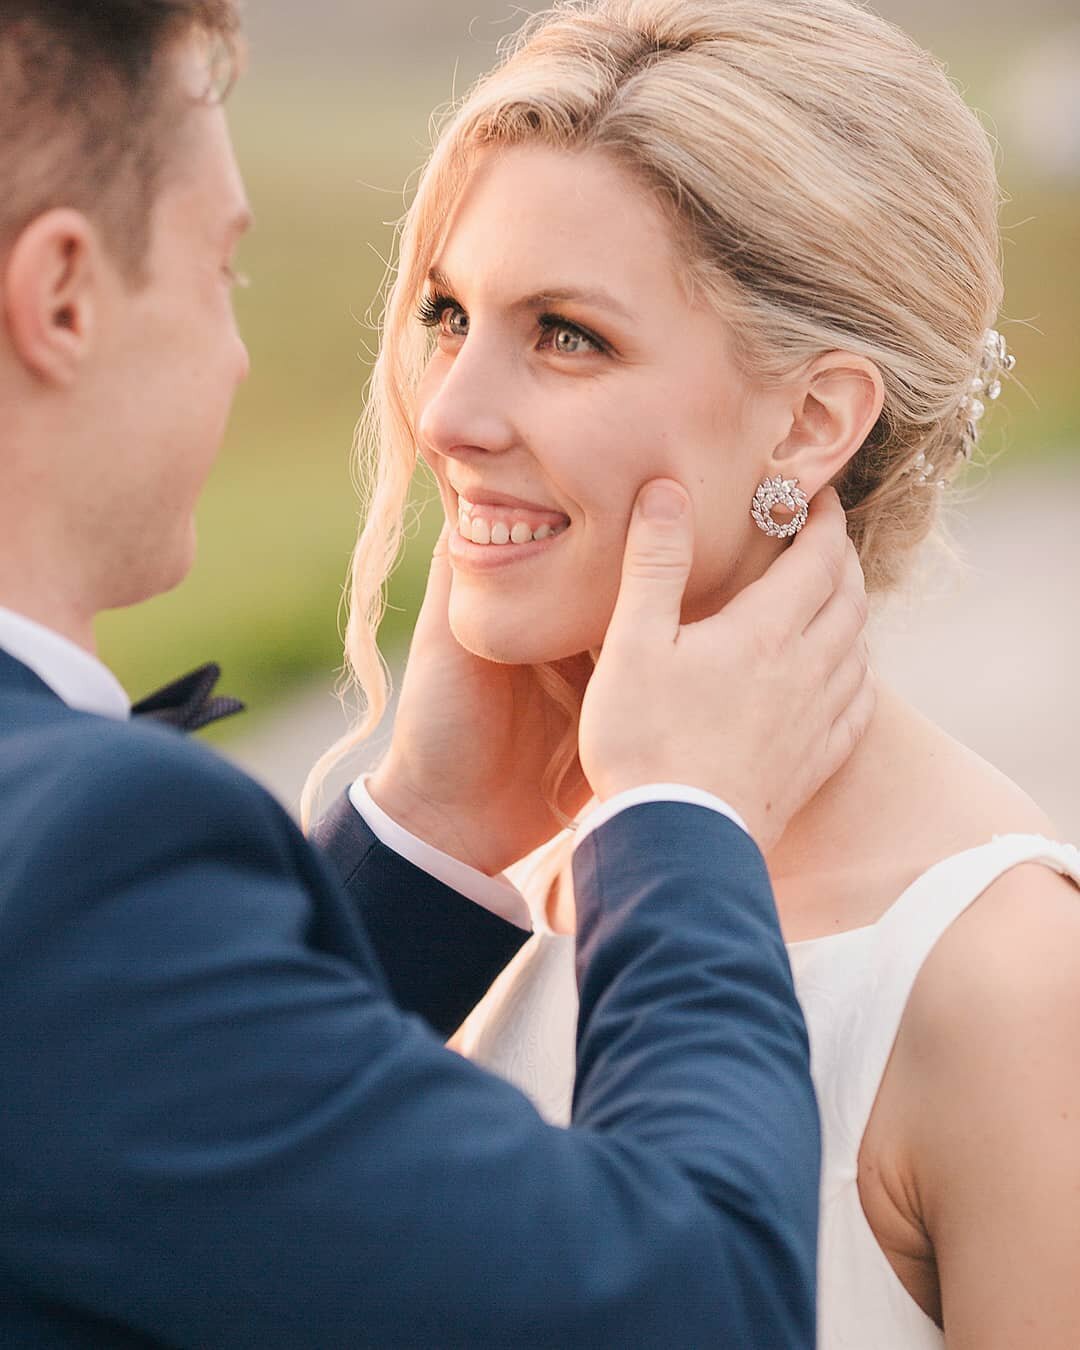 One look is all it takes 😍
.
.
.
#weddingportrait #bridalportrait #weddingphotographer #porocnifotograf #poroka #lumeriaweddings #weddinginslovenia